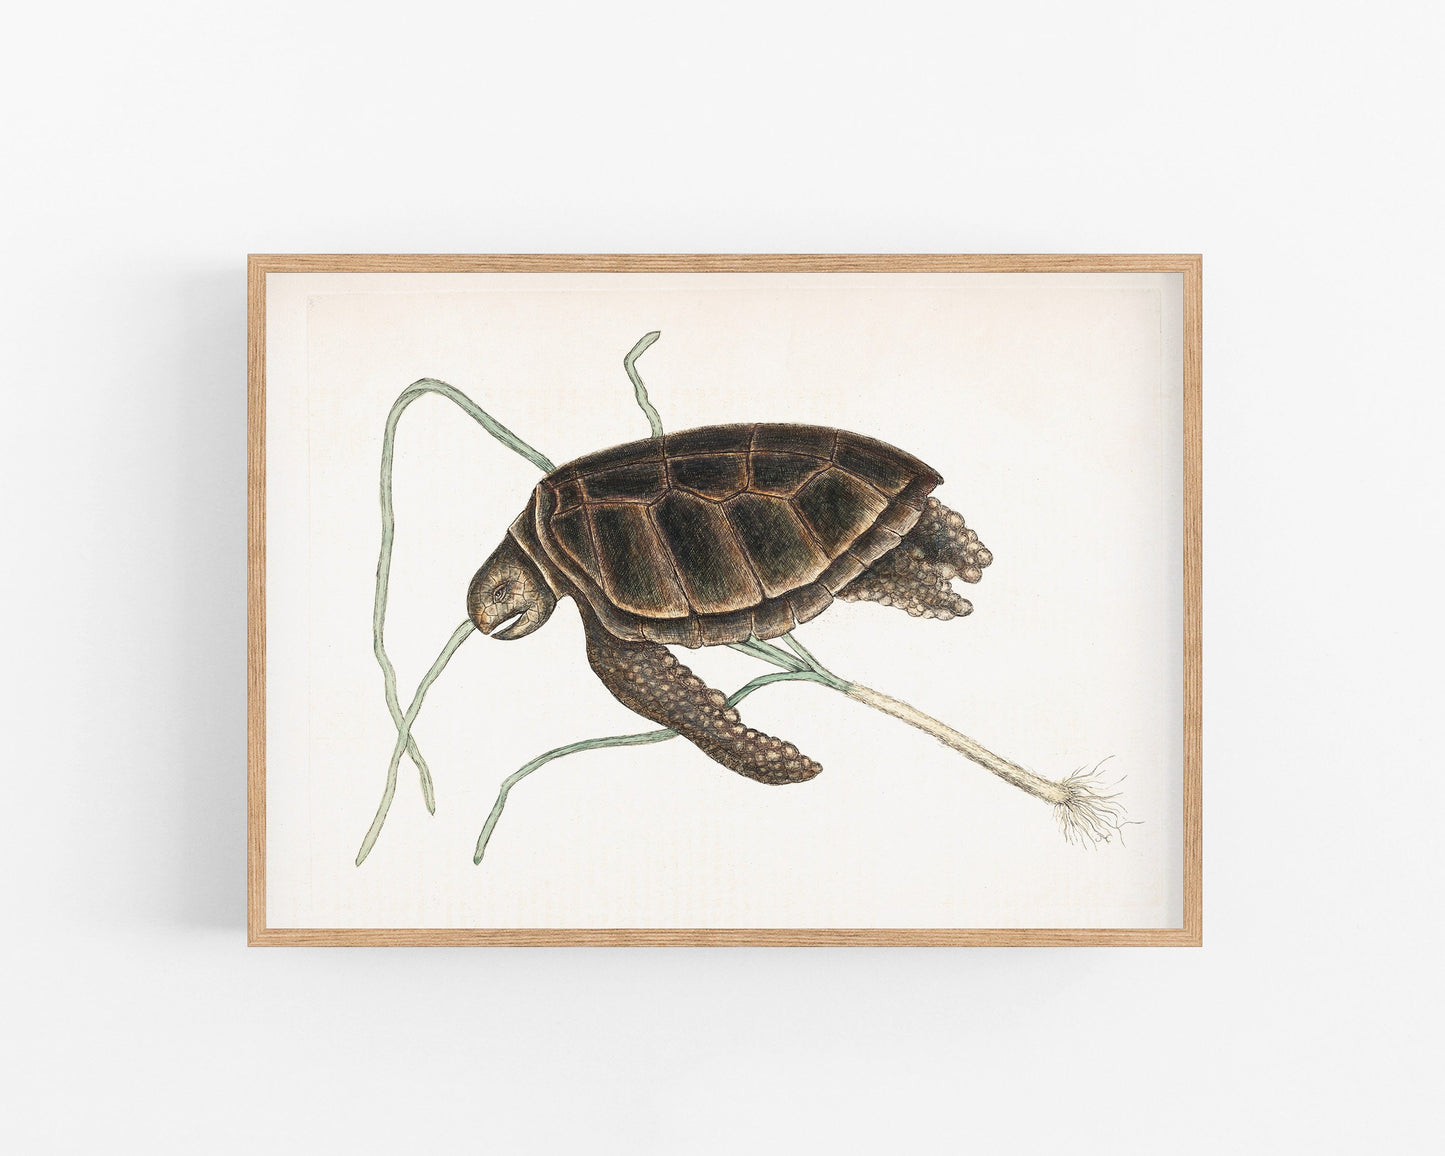 Vintage turtle art | Mark Catesby print | Animal wall art | Natural history illustration | Water, ocean animal | 18th century painting